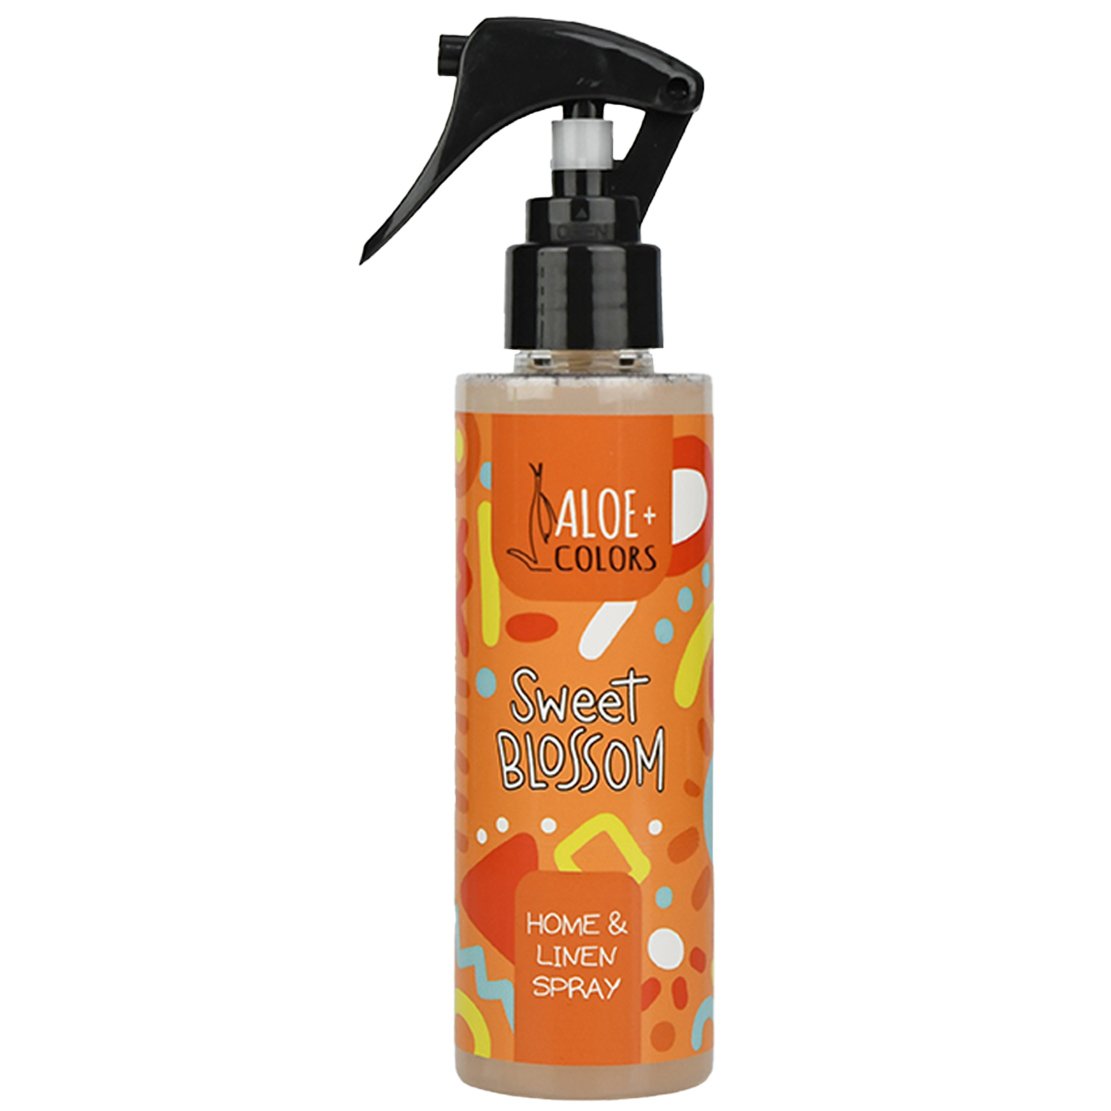 Aloe+ Colors Sweet Blossom Home & Linen Spray Αρωματικό Spray Χώρου & Υφασμάτων με Έντονο Άρωμα Βανίλια, Πορτοκάλι 150ml 53013